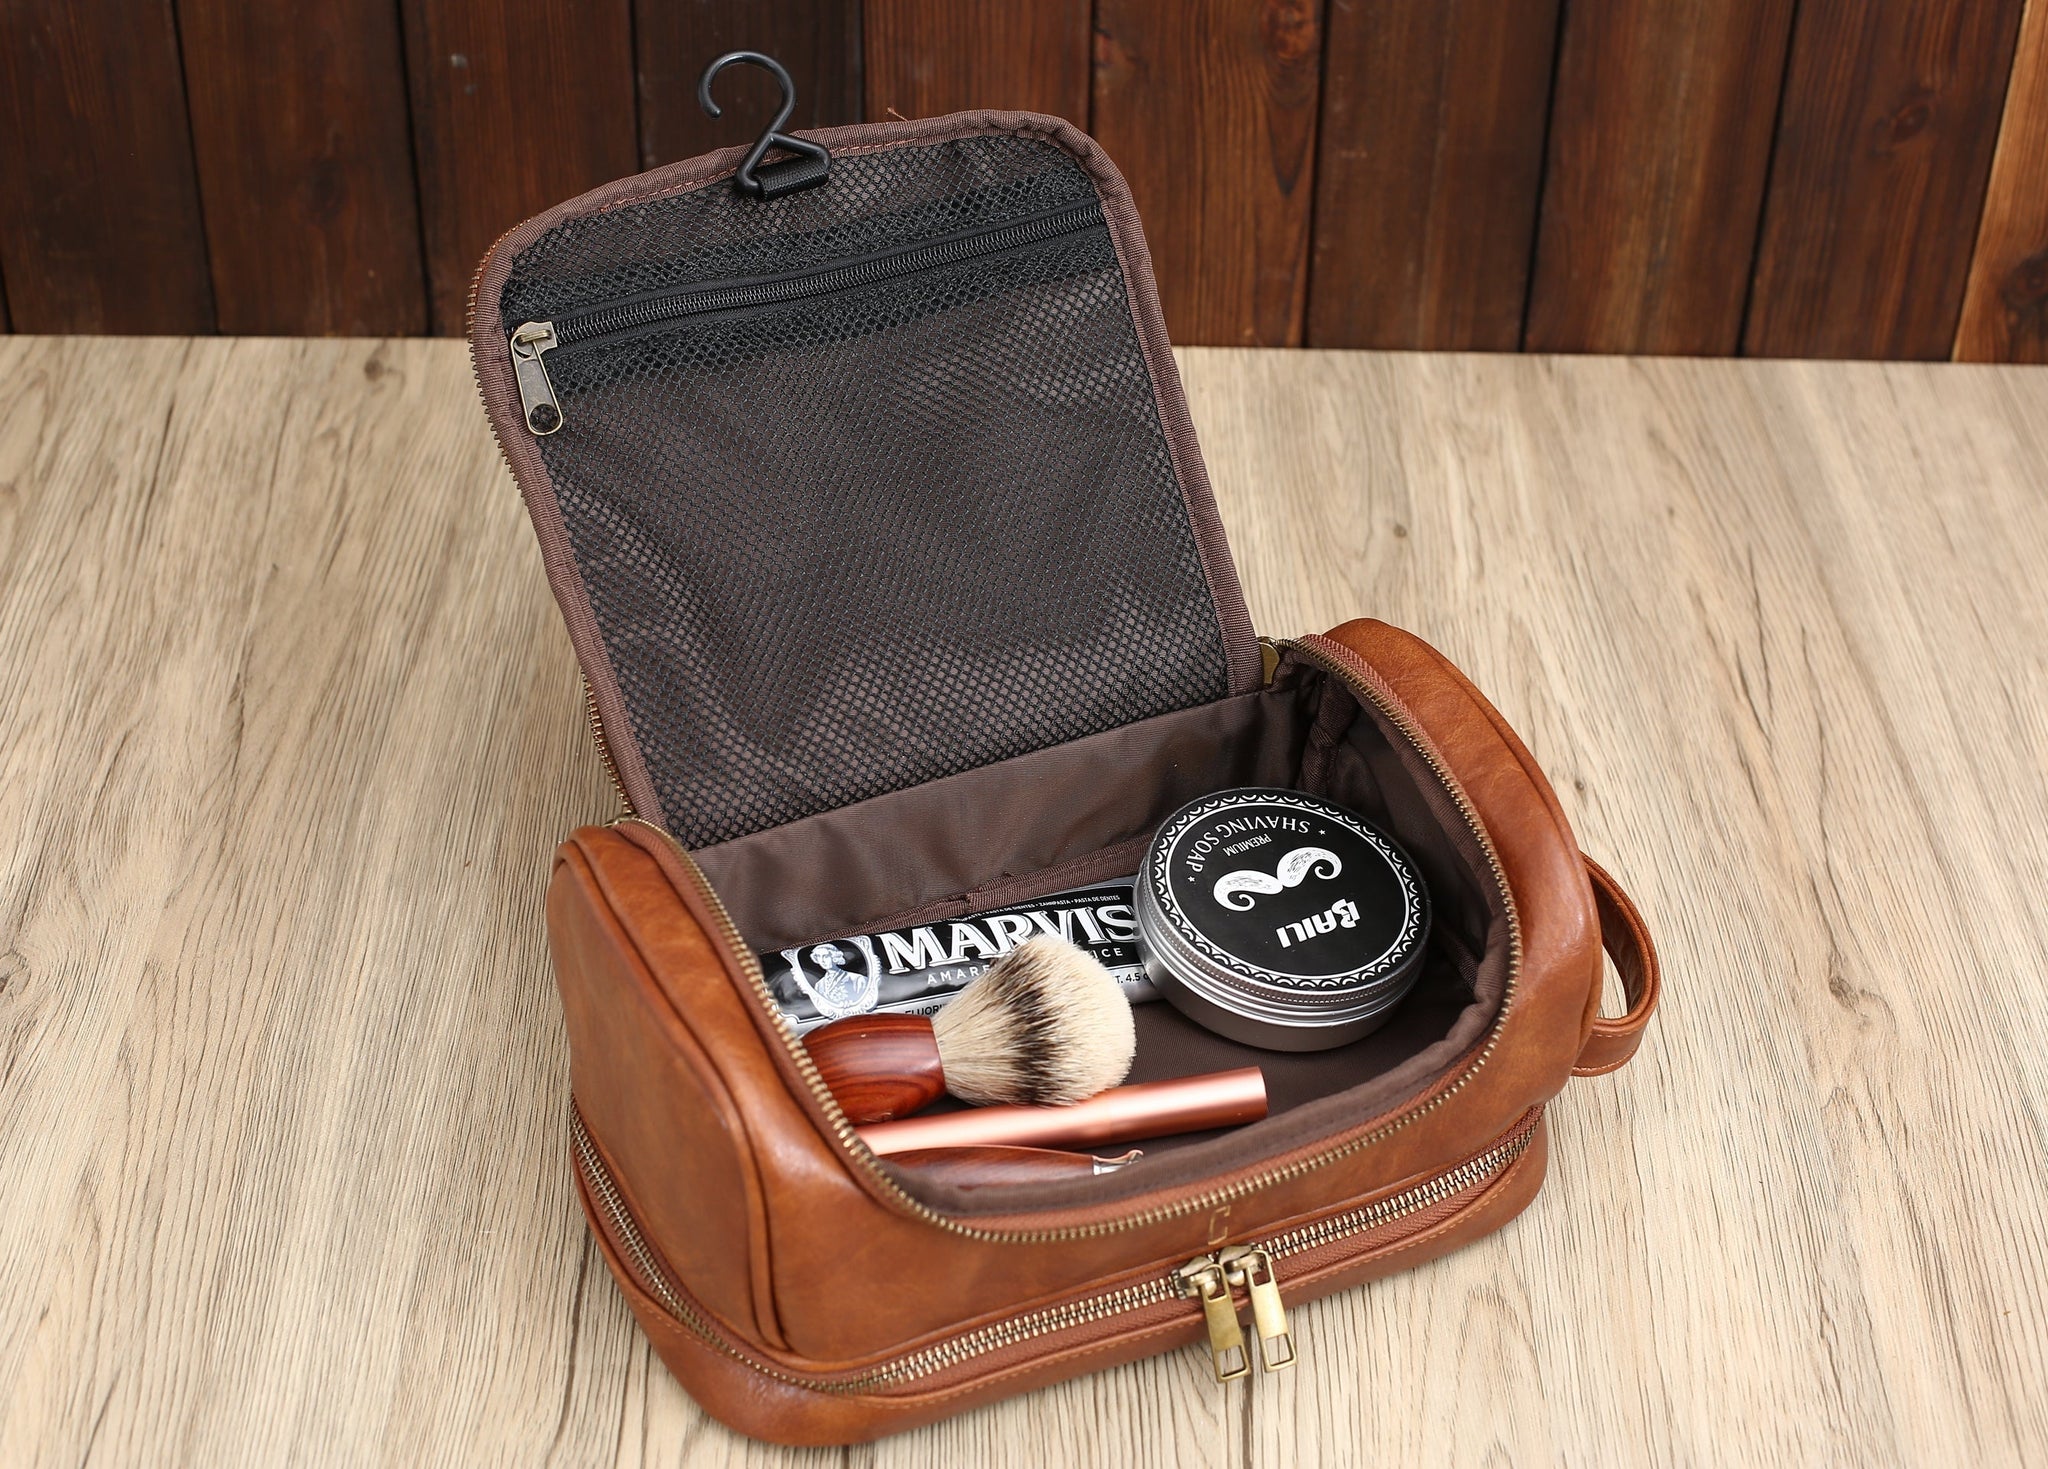 Handmade Leather Dopp Kit, Leather Toiletry Bag